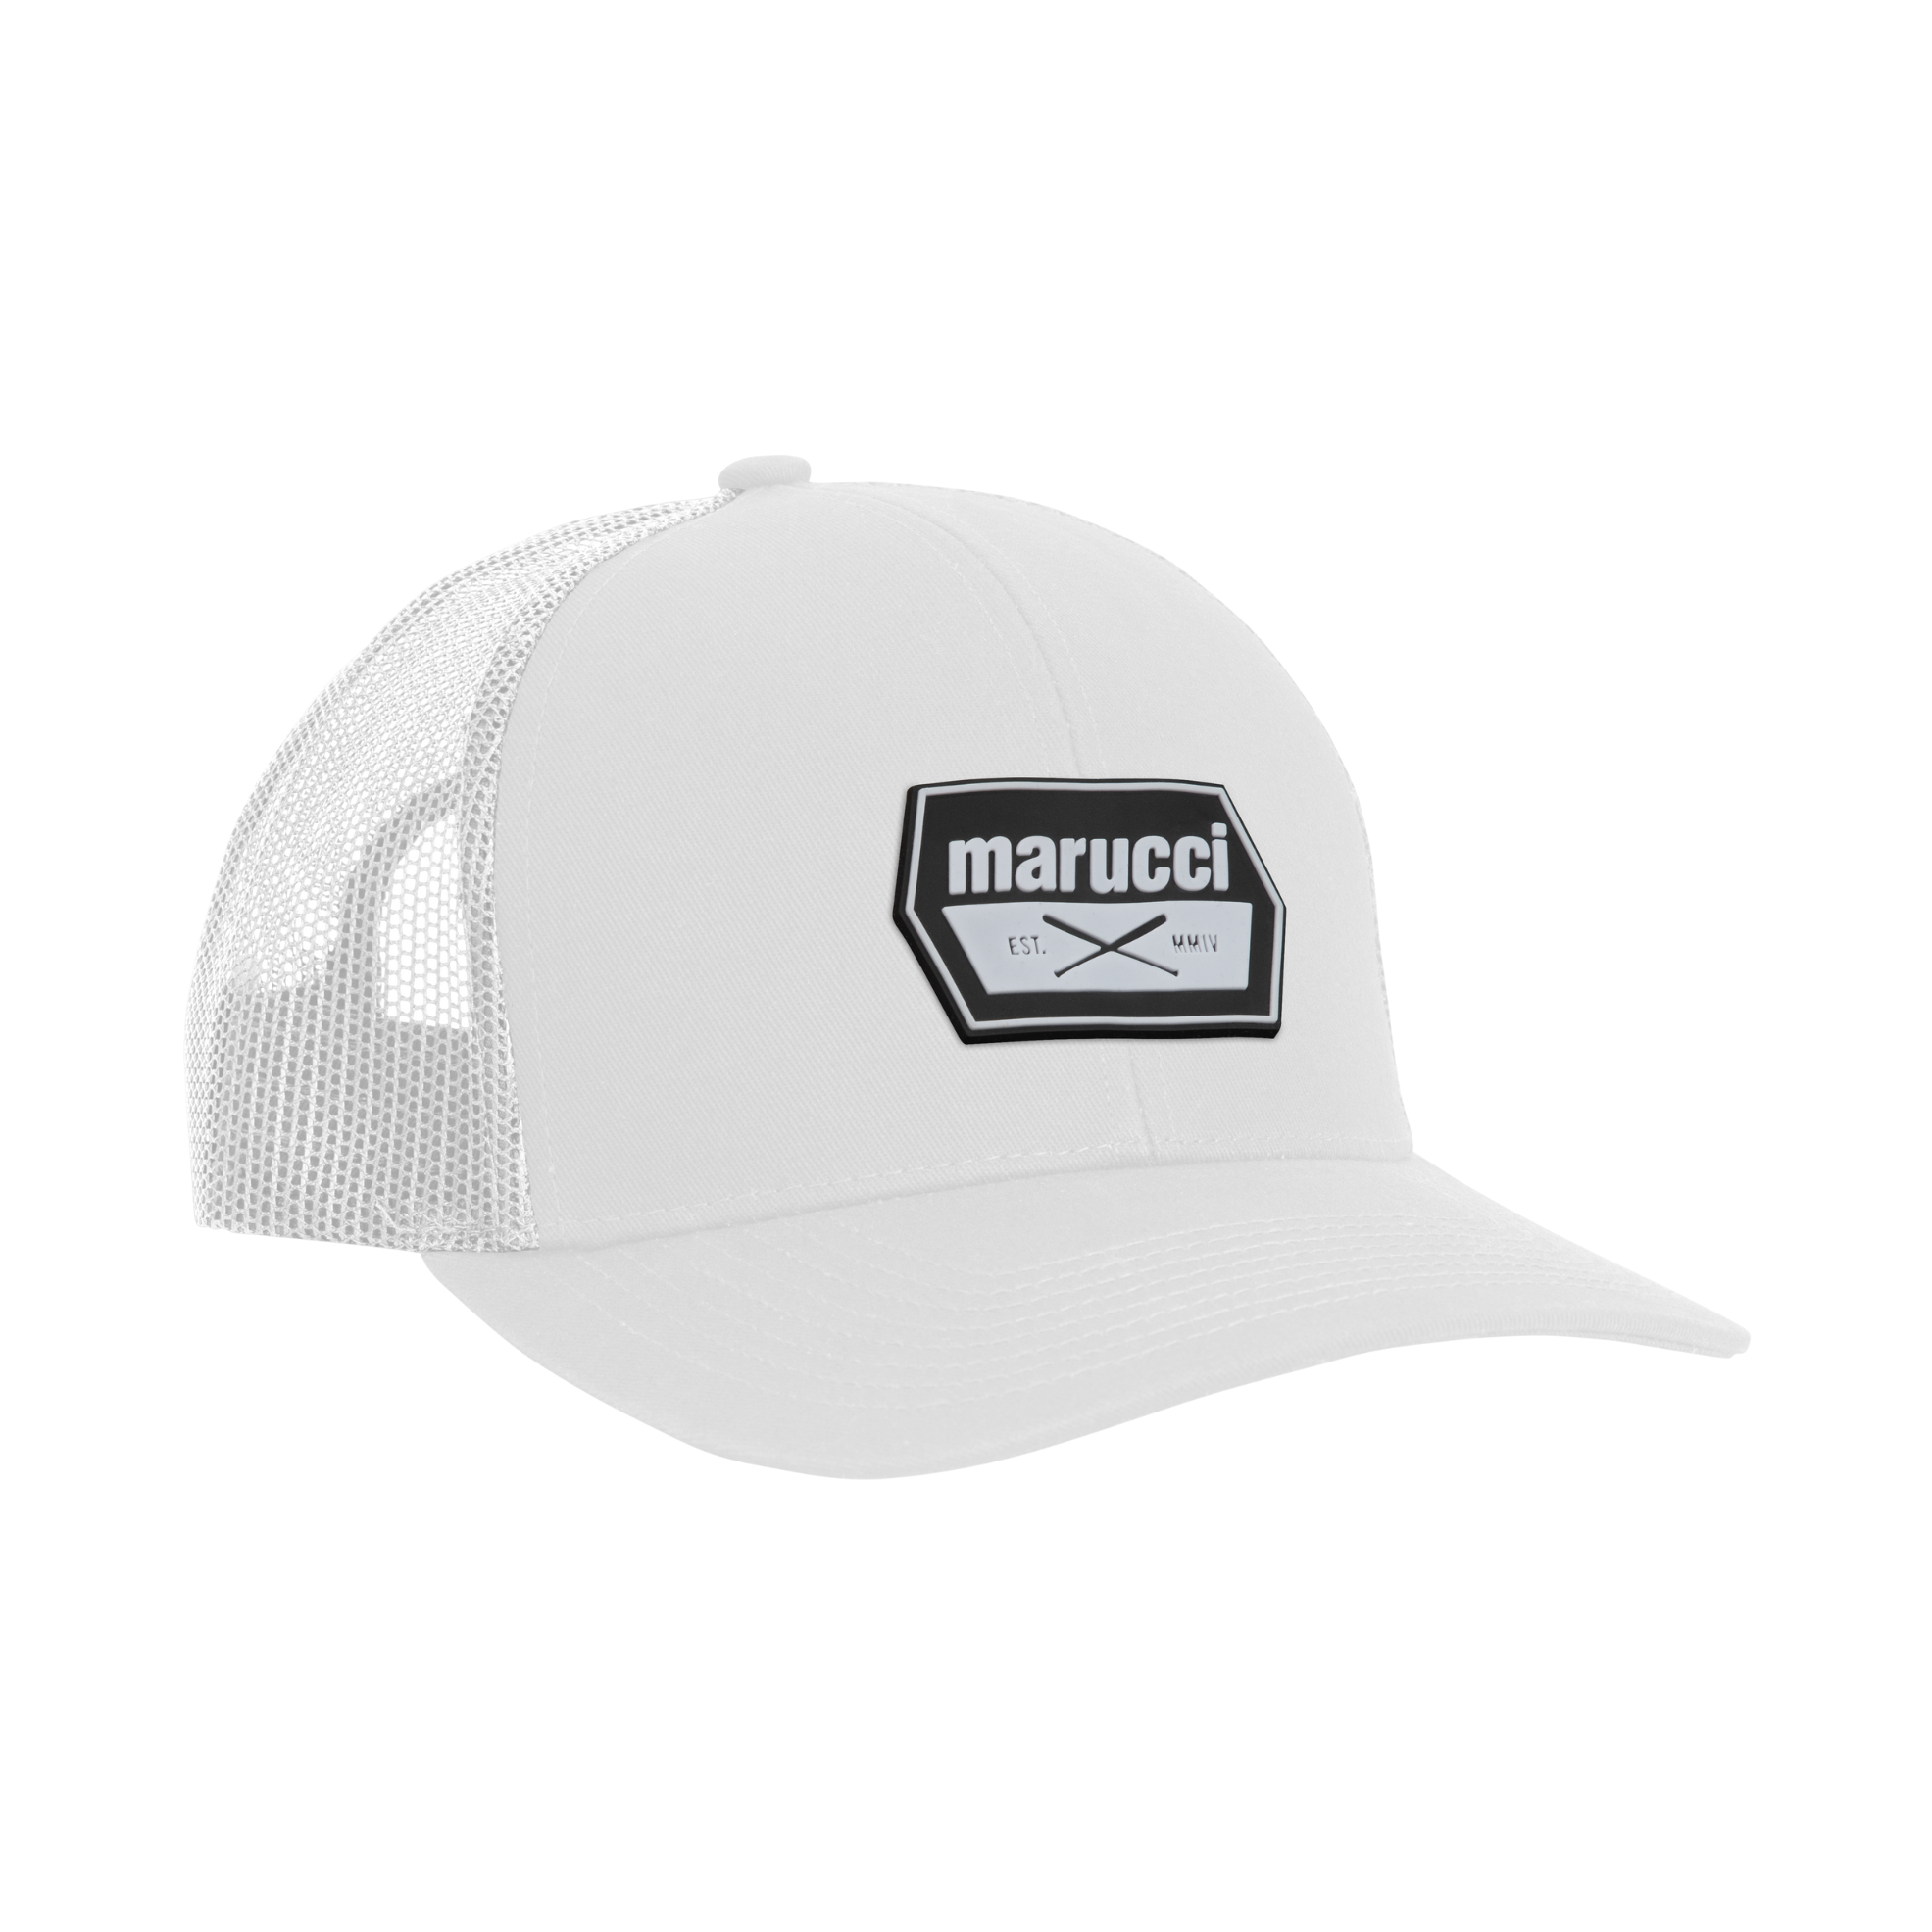 Marucci Rubber Cross Patch Trucker Hat White/White